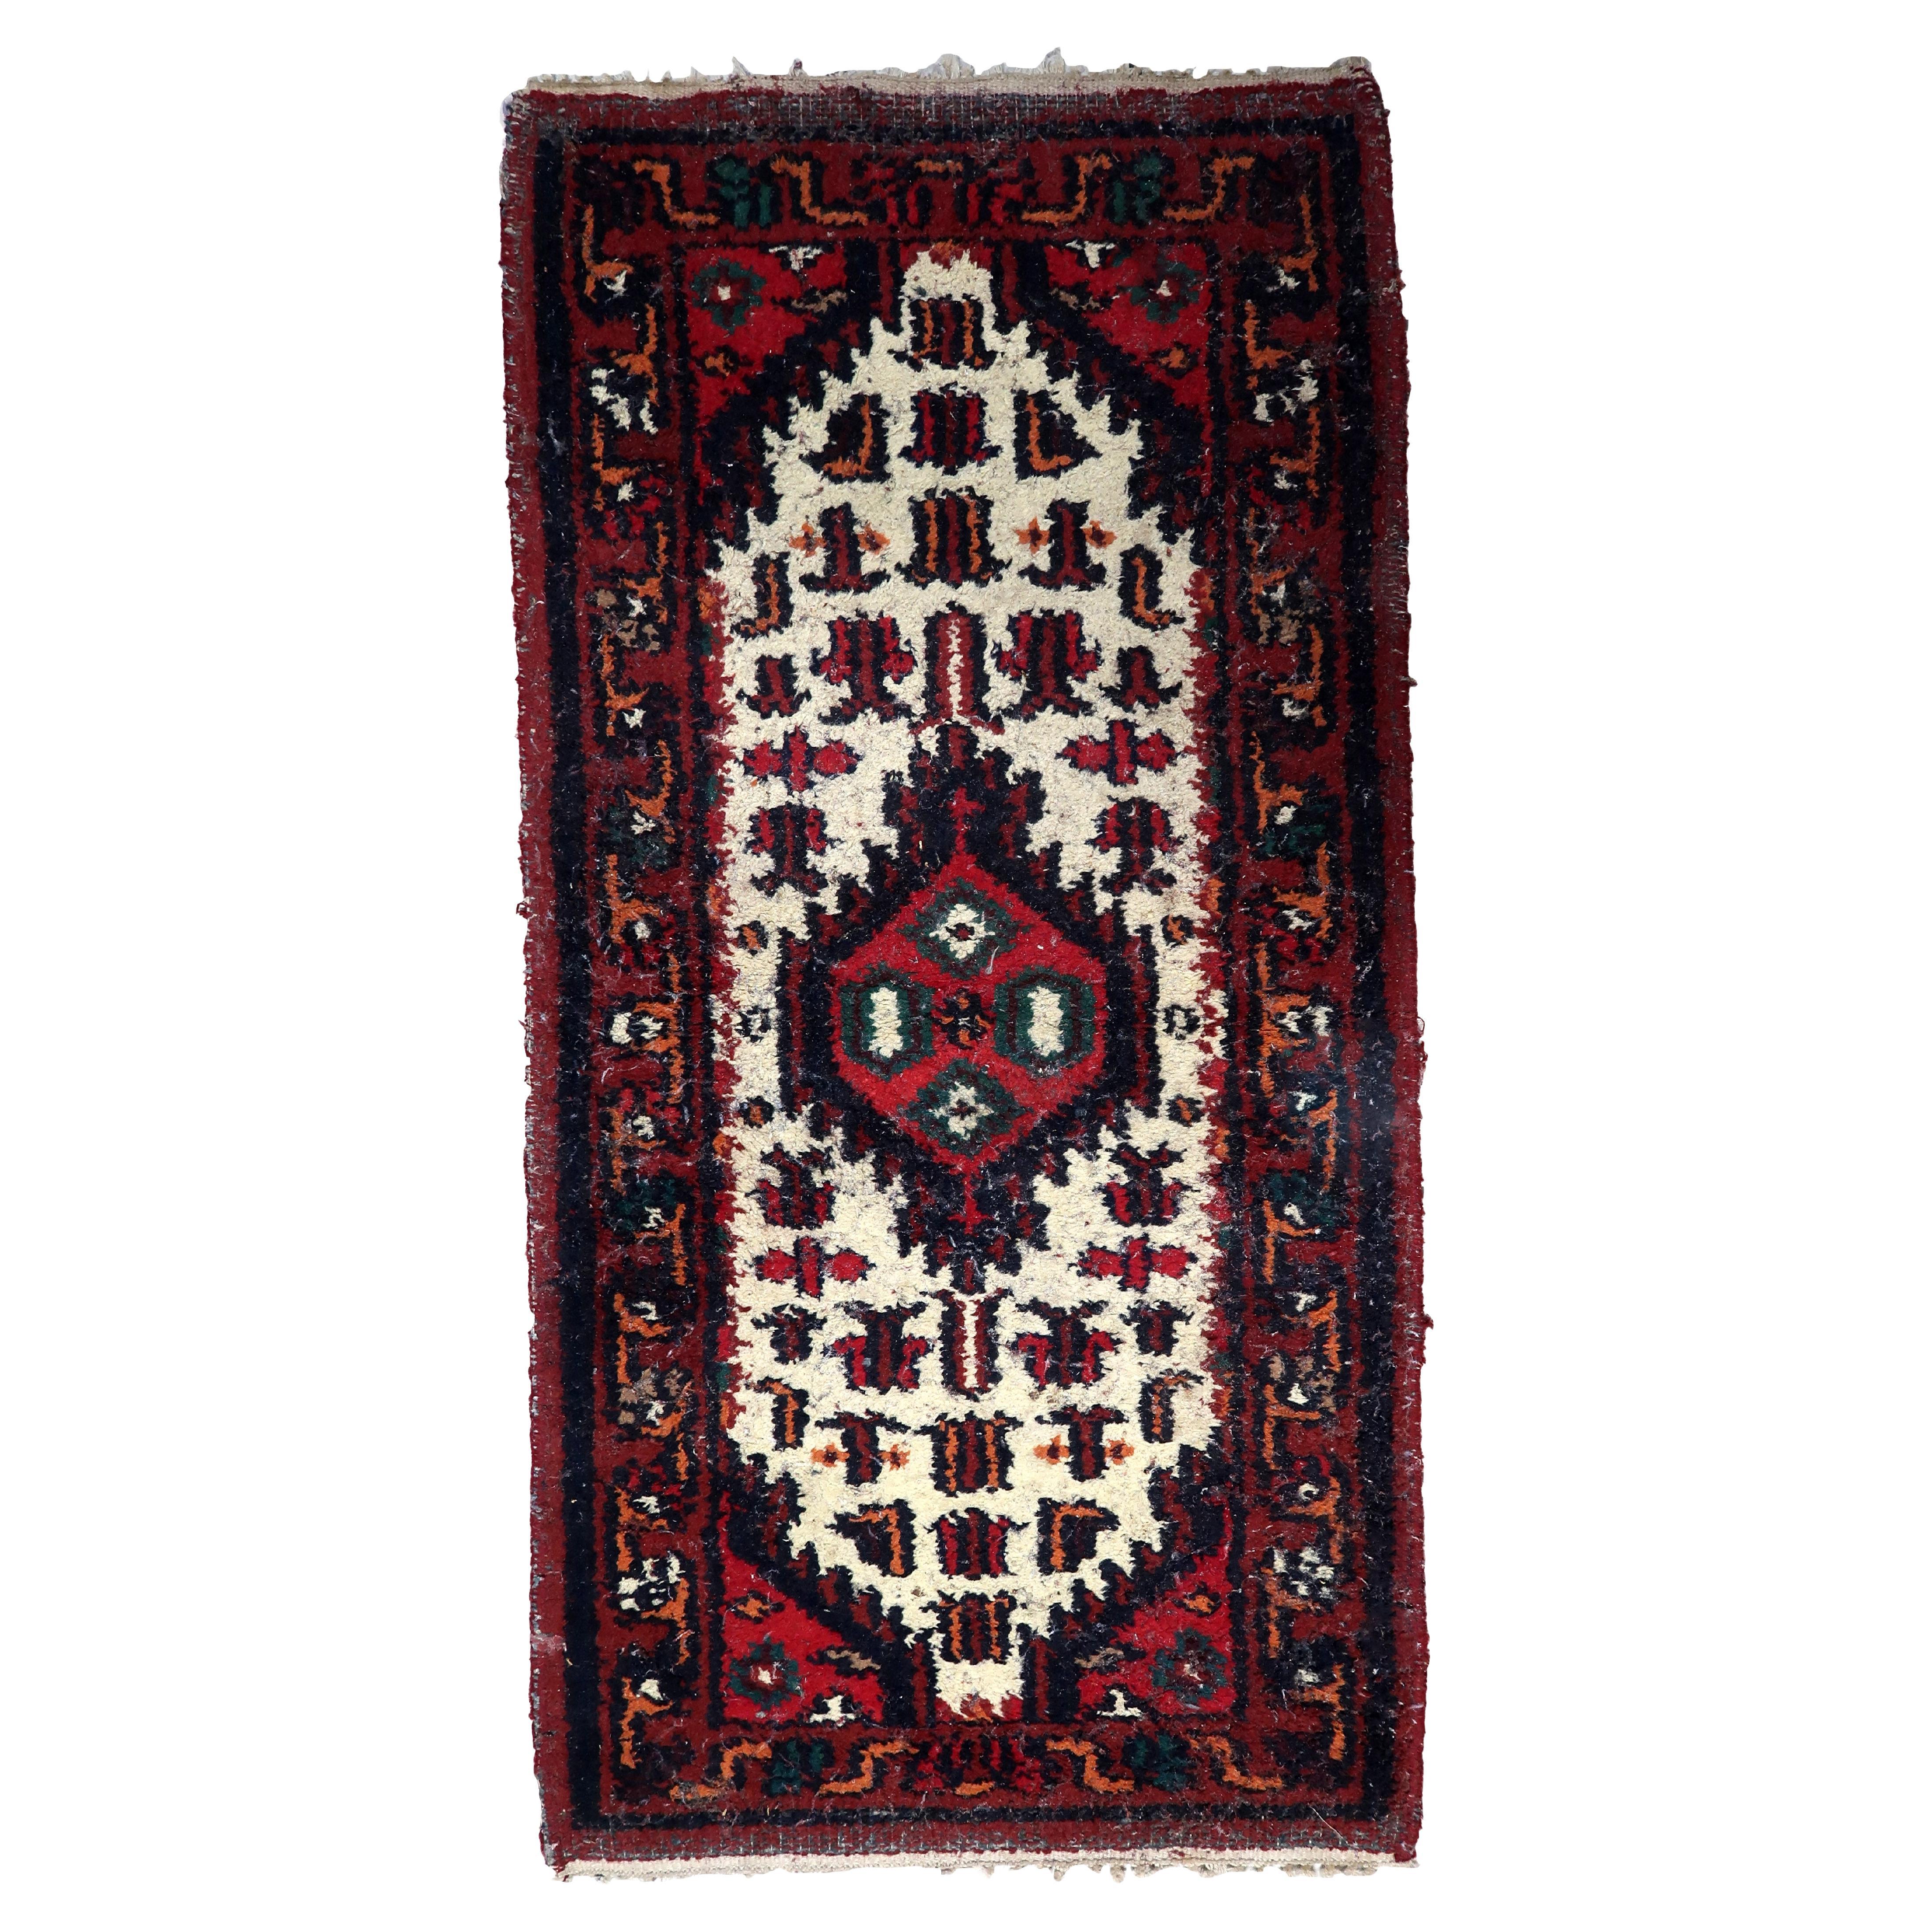 Handmade Vintage Persian Style Hamadan Rug 1970s - 1C1079 For Sale